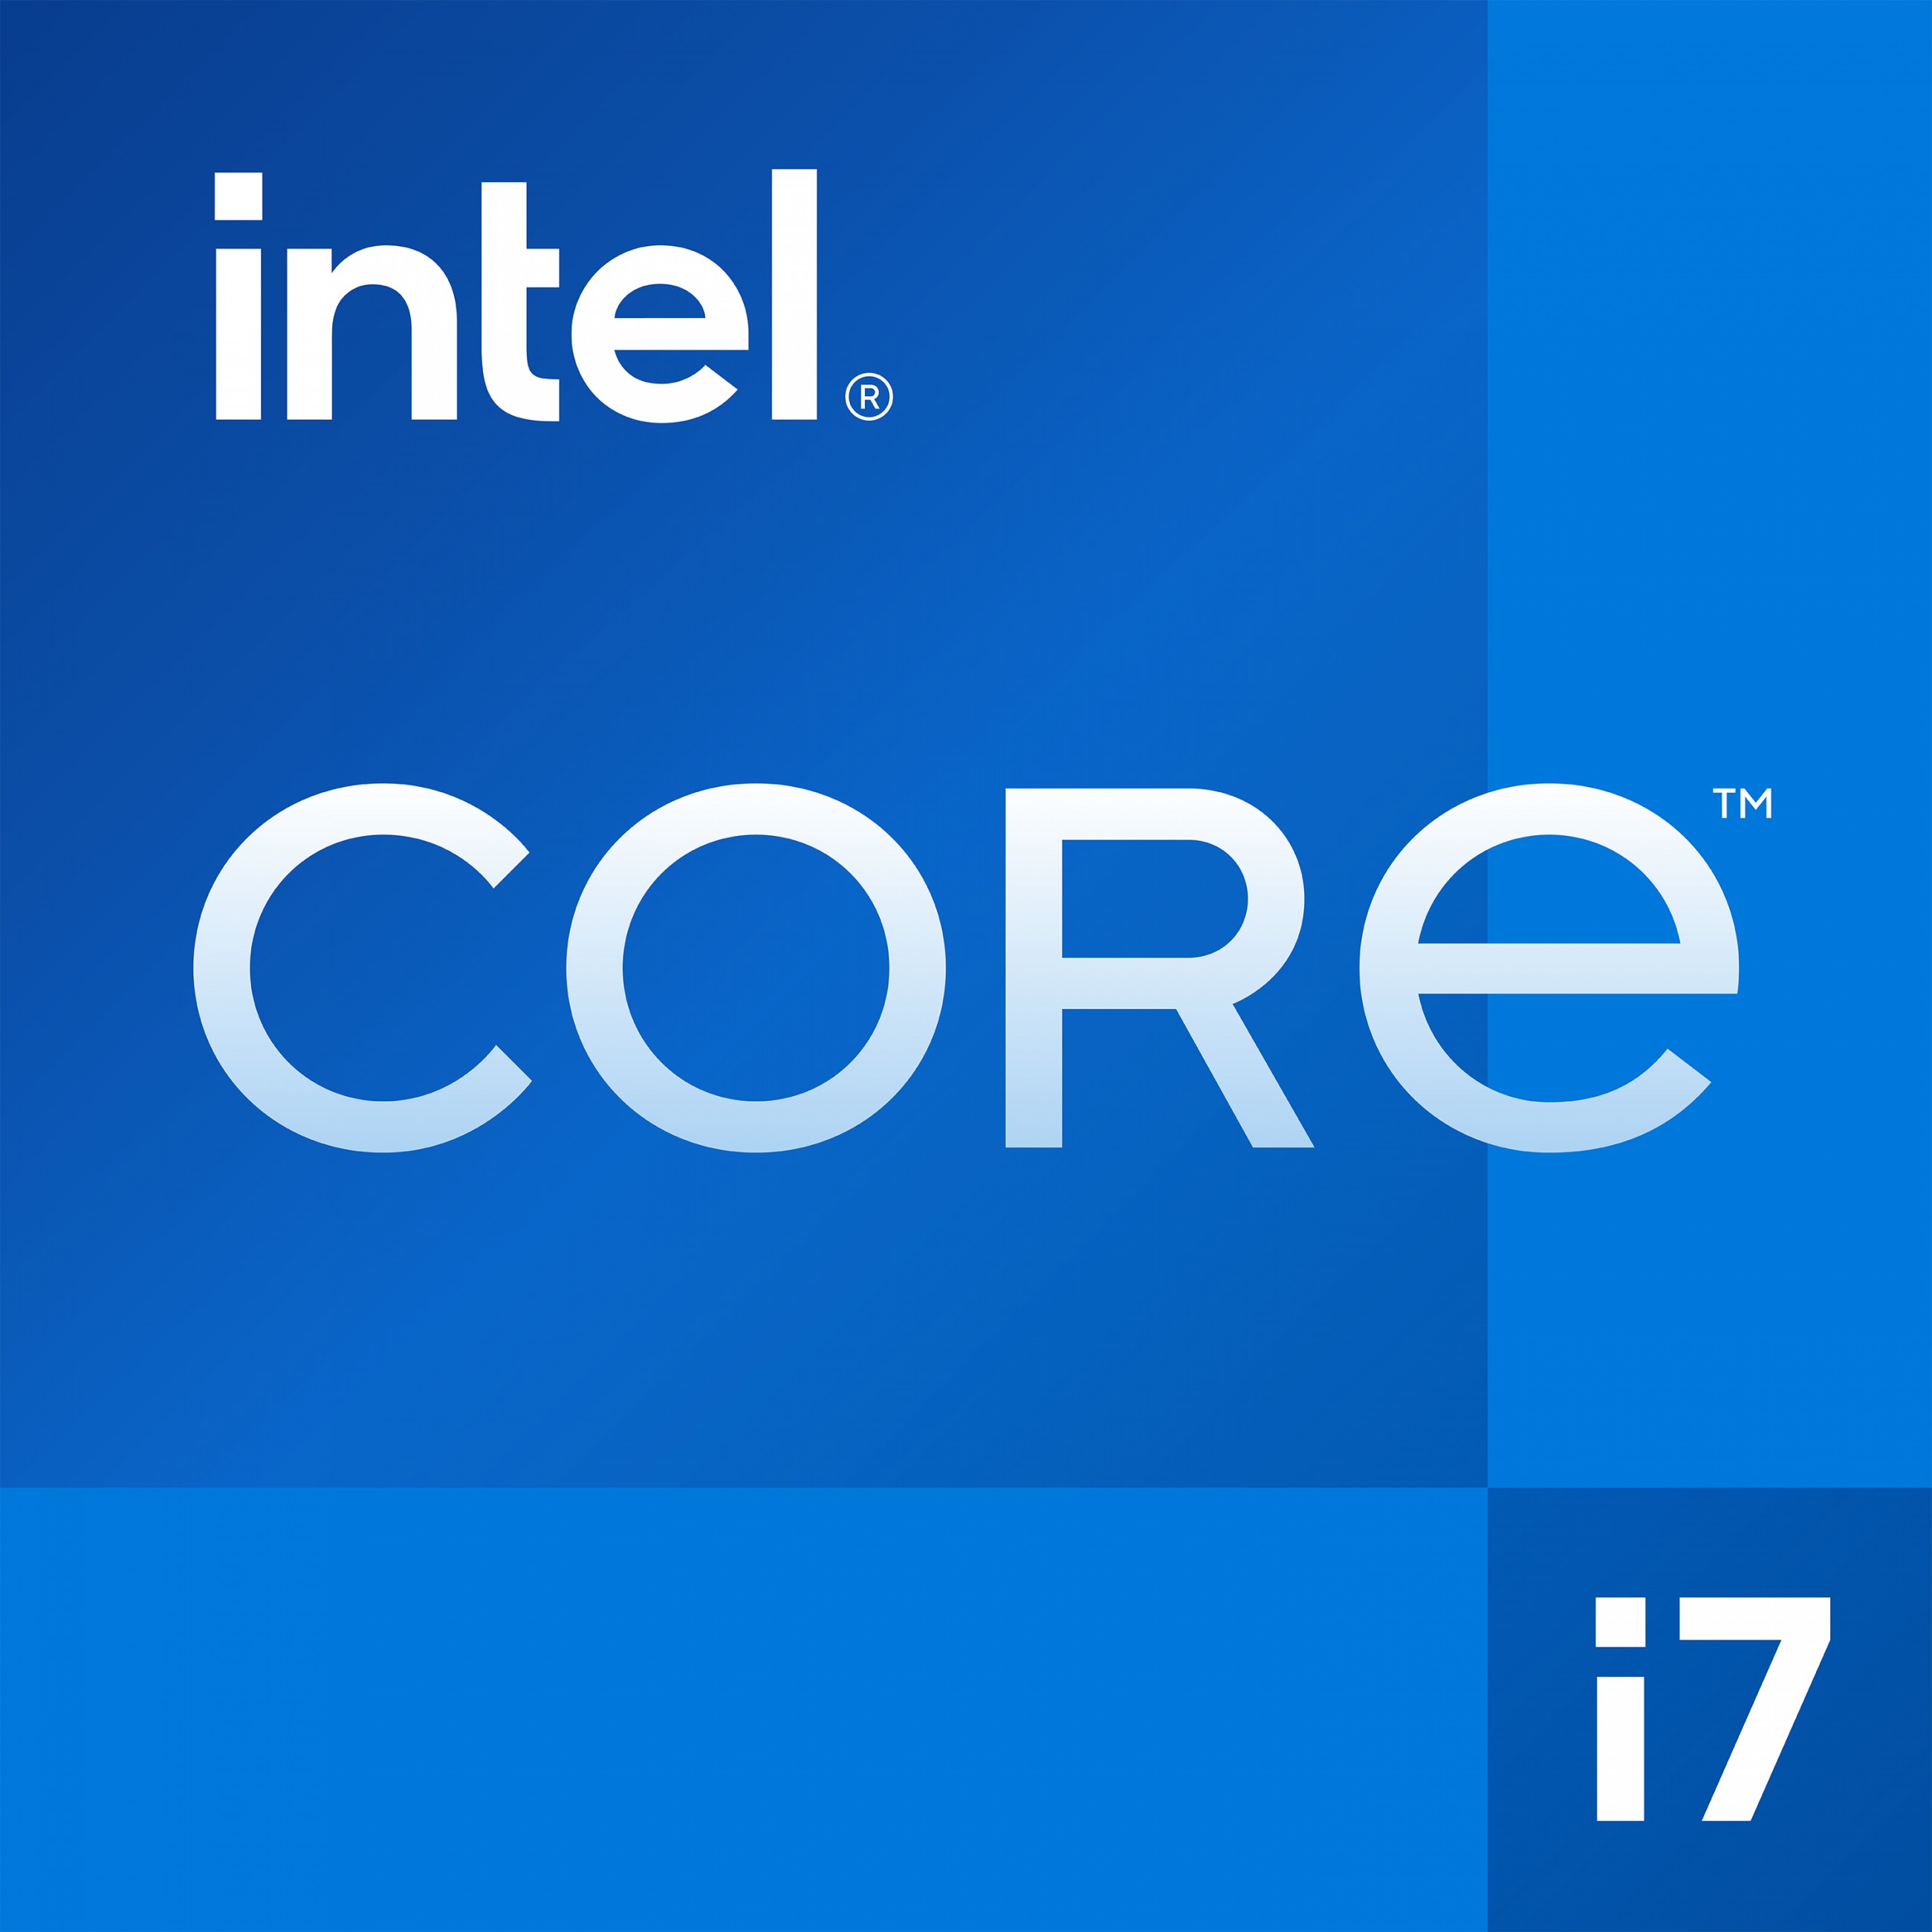 Intel Core i7-11700K processor